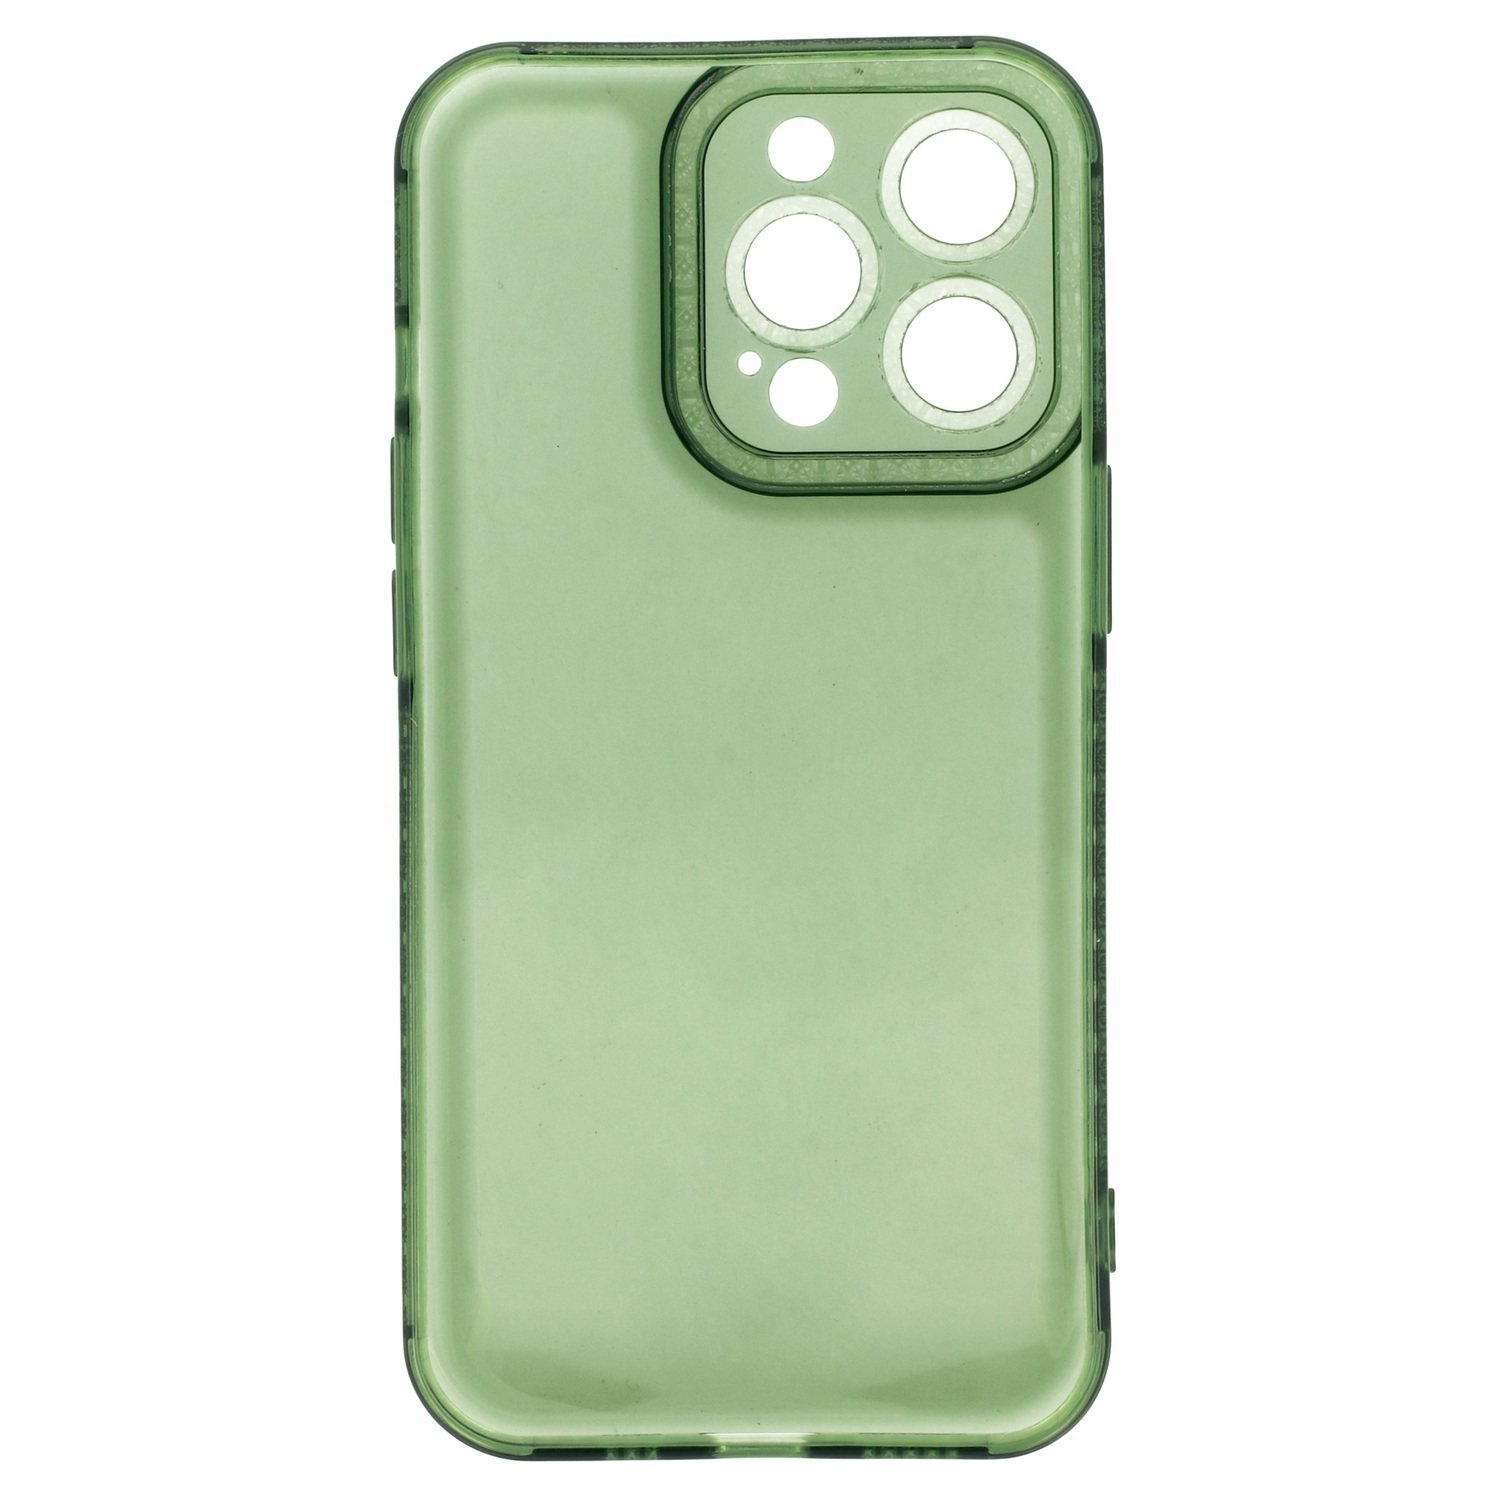 Pokrowiec etui silikonowe Crystal Diamond Case zielone APPLE iPhone 7 / 5